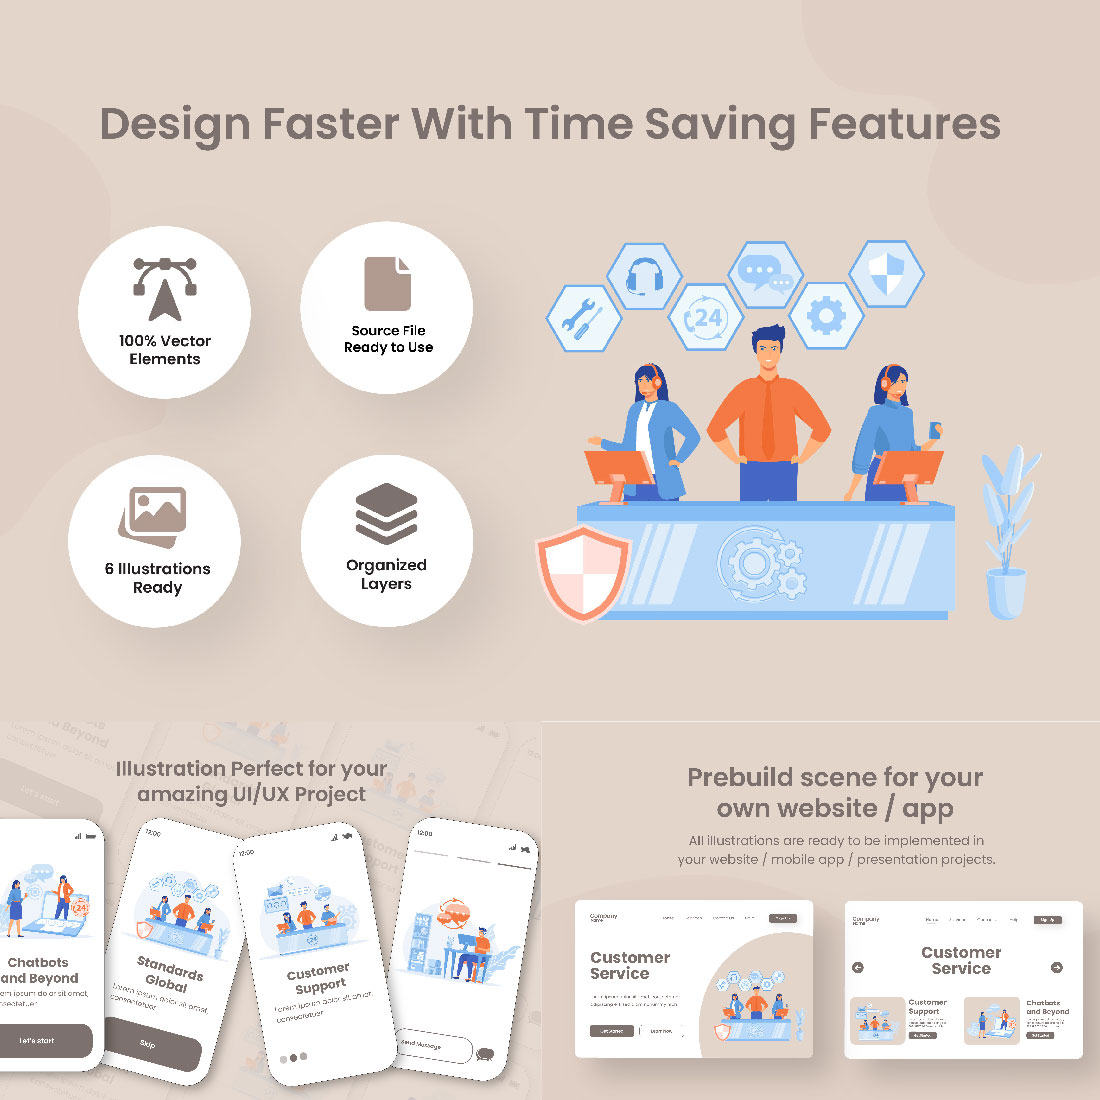 Customer Support & Assistance Service Illustration Design preview image.